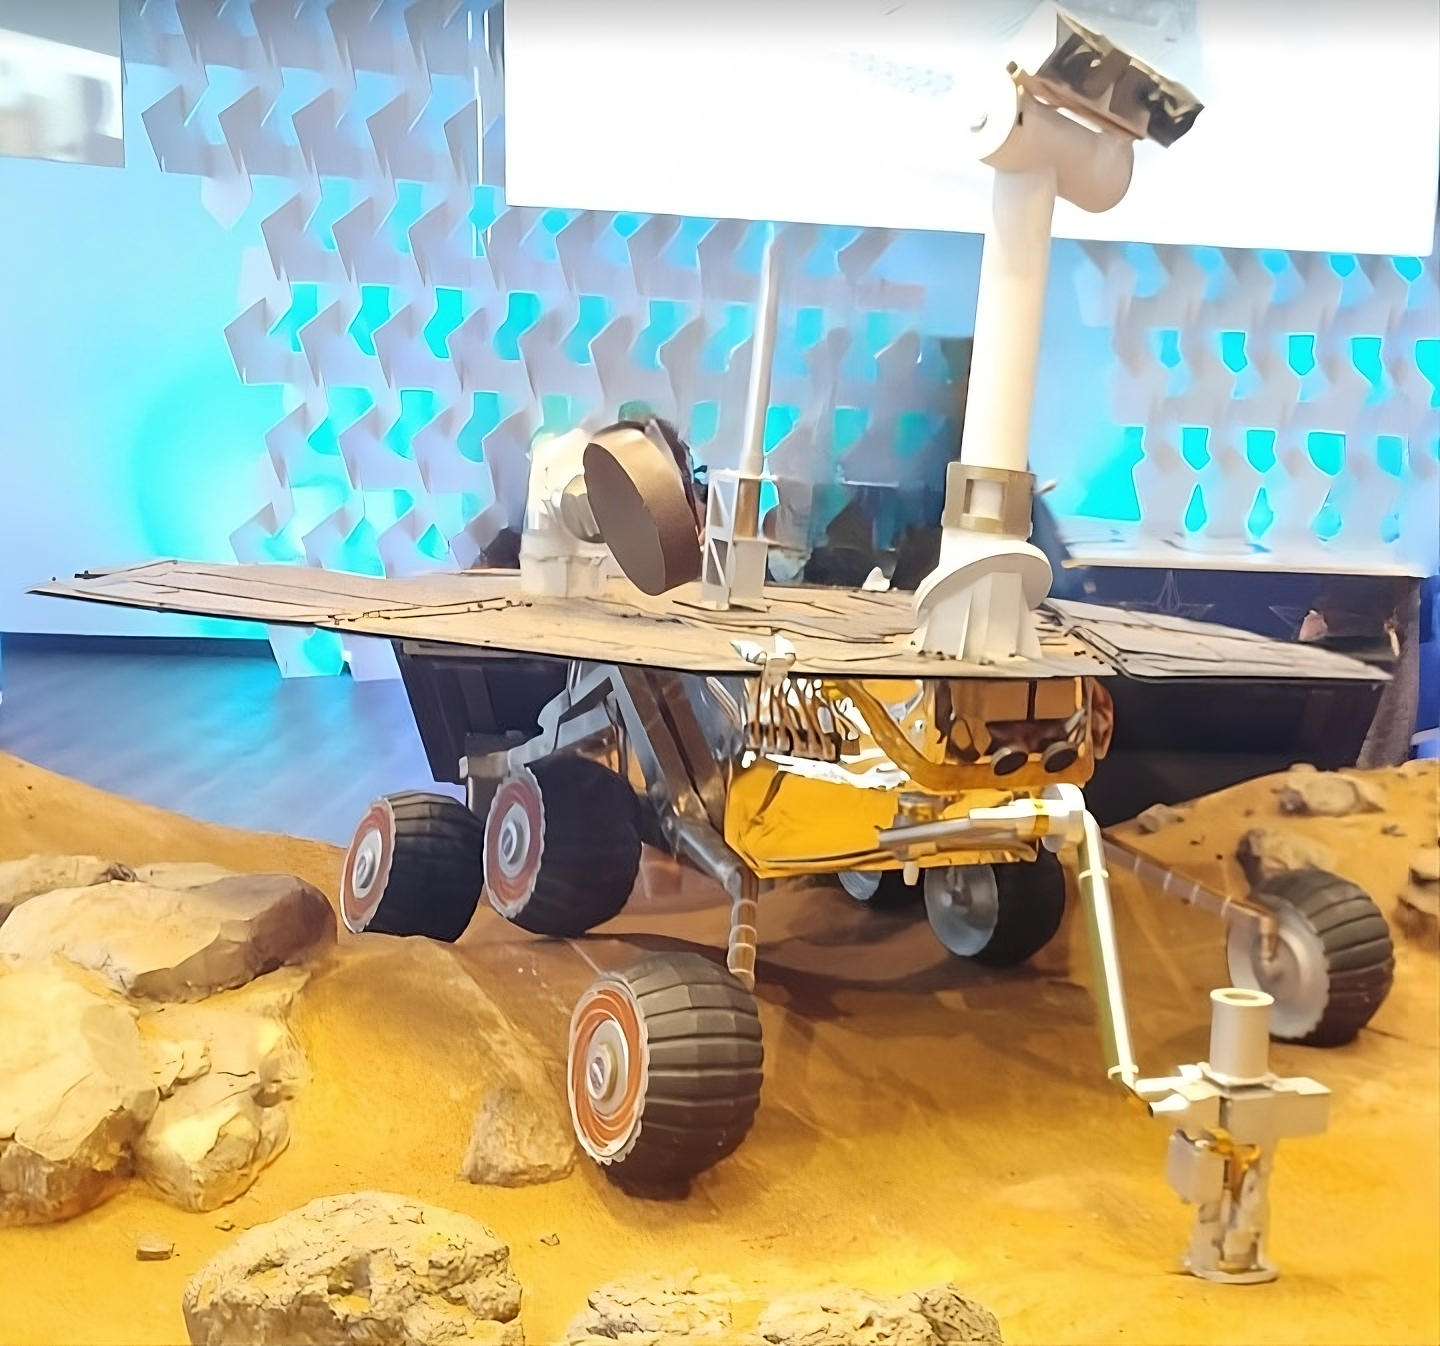 Robots for space exploration